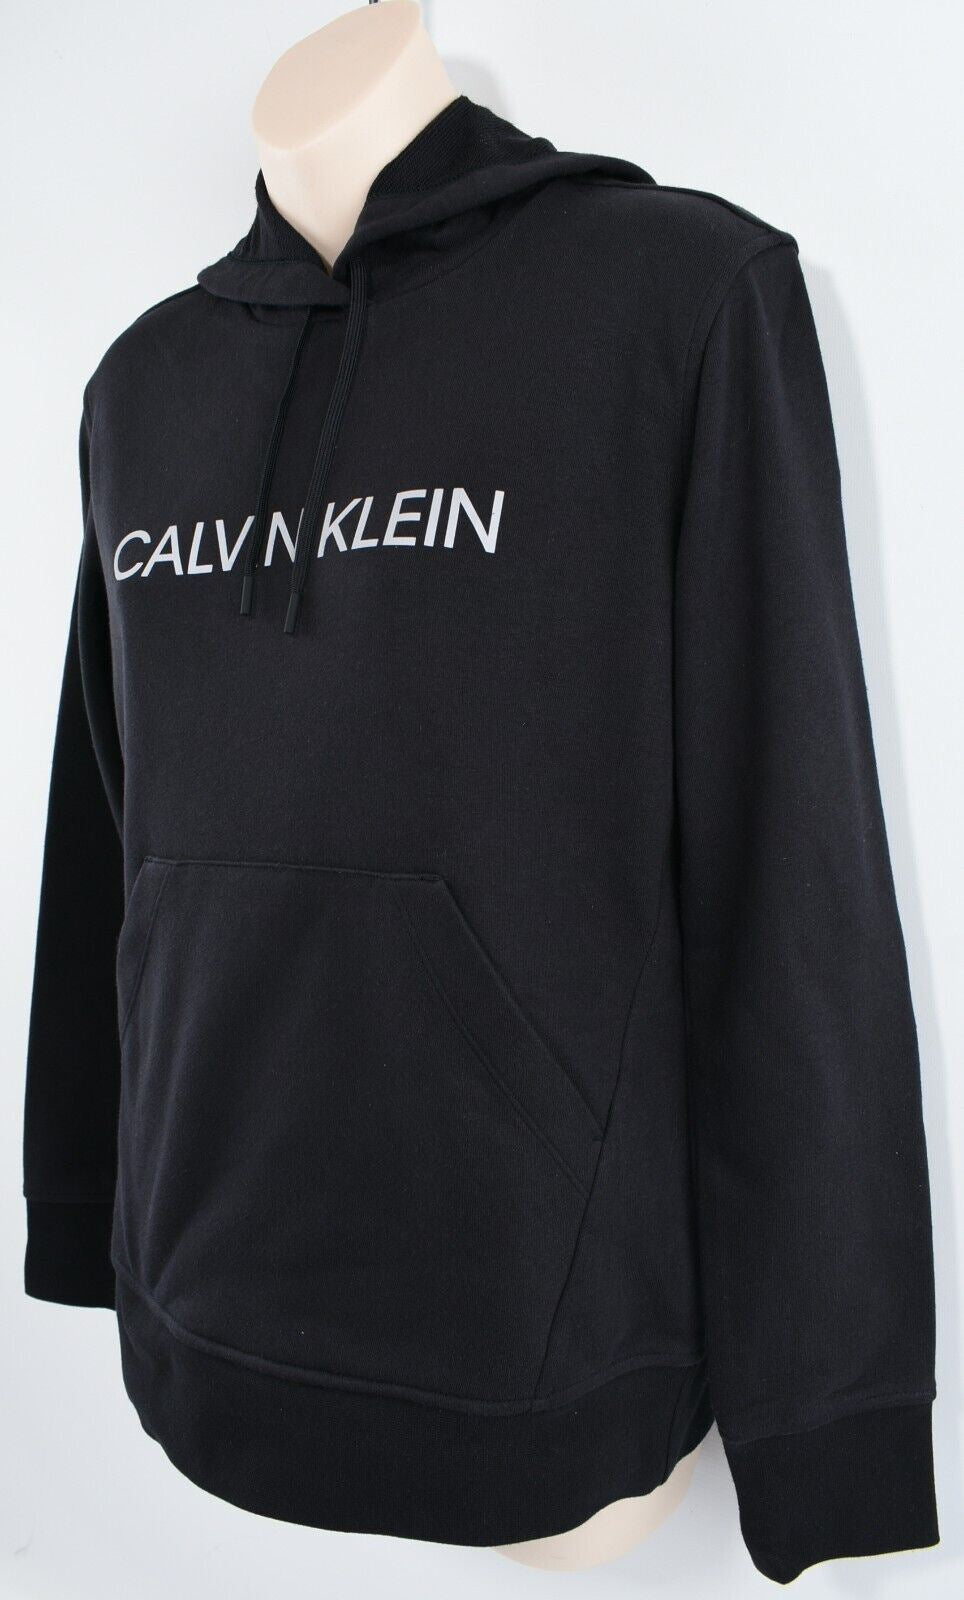 CALVIN KLEIN Performance Women's Hoodie, Hooded Sweatshirt, Black size XS (UK 8)